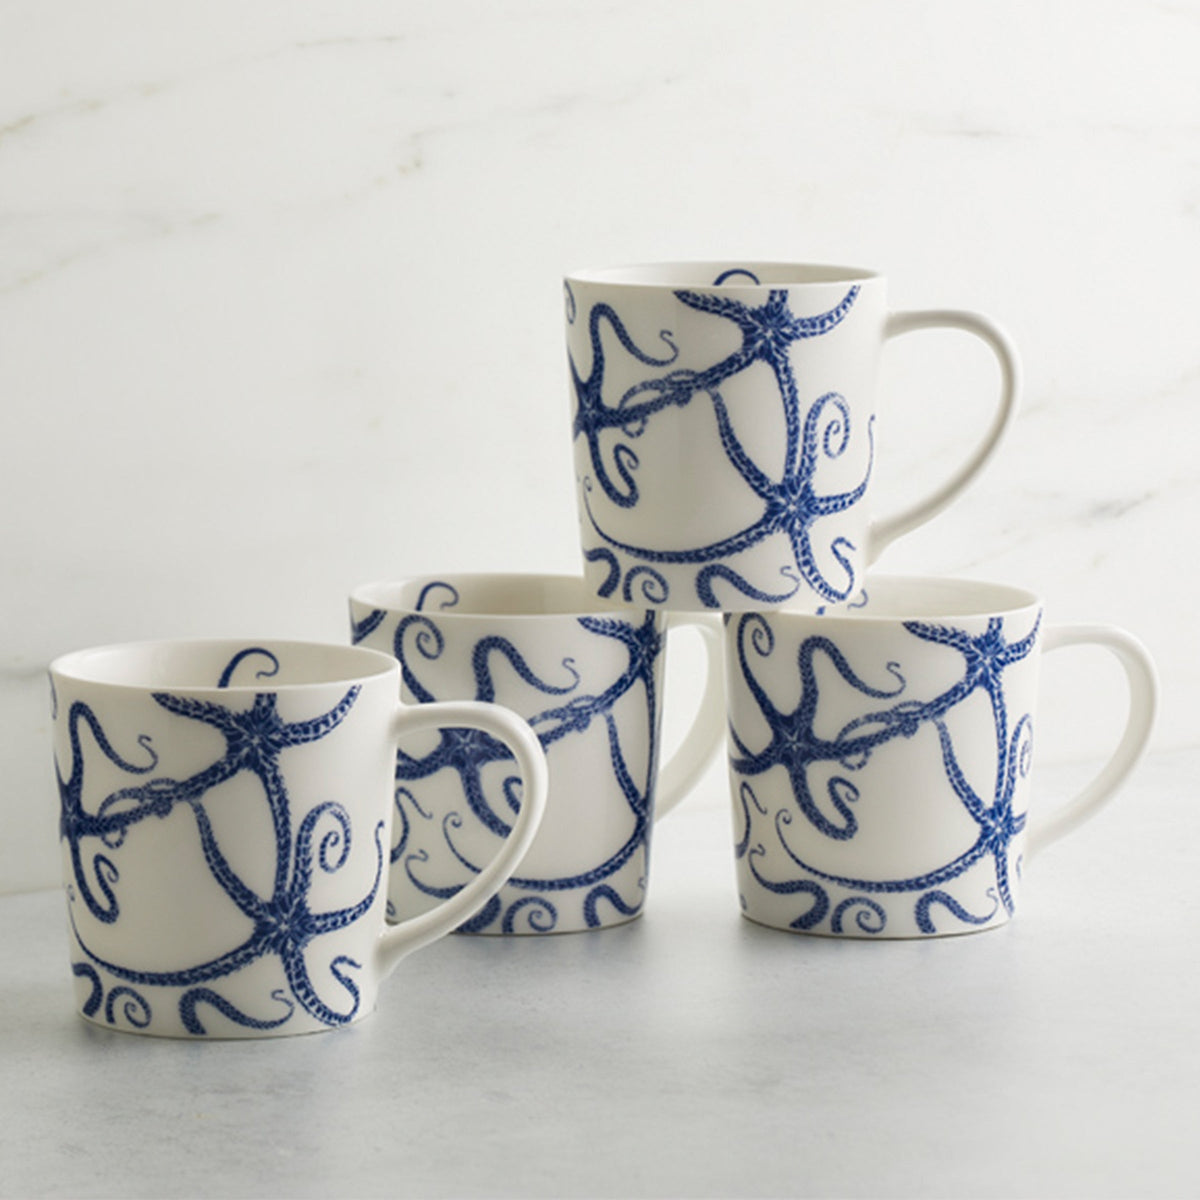 Four Starfish Mug Blue with octopus designs from Caskata Artisanal Home.